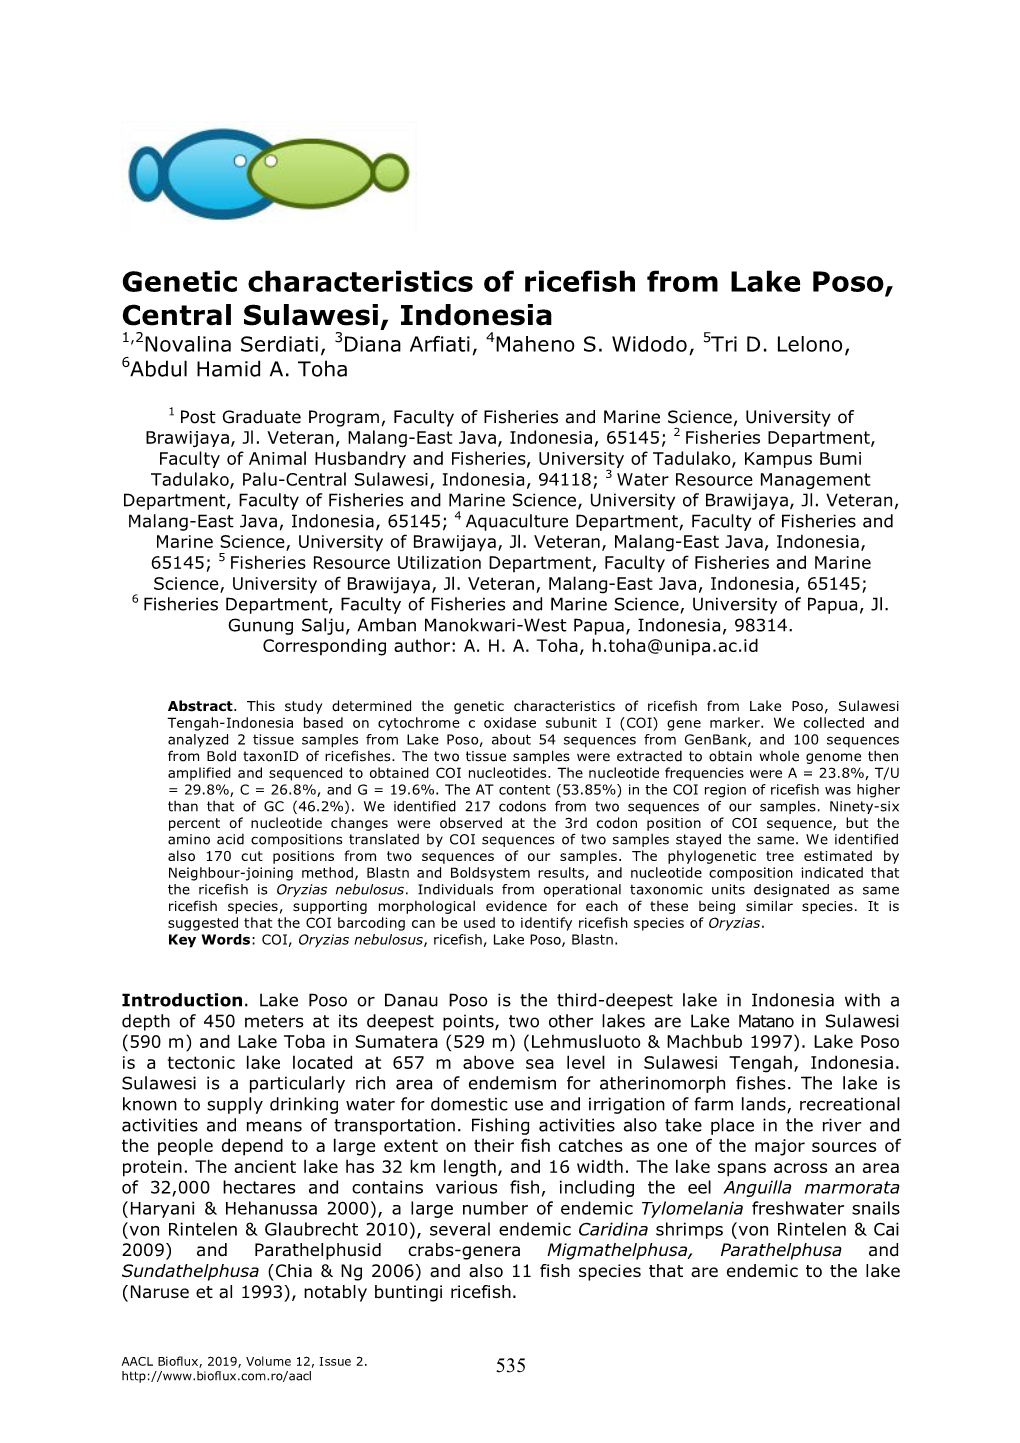 Genetic Characteristics of Ricefish from Lake Poso, Central Sulawesi, Indonesia 1,2Novalina Serdiati, 3Diana Arfiati, 4Maheno S